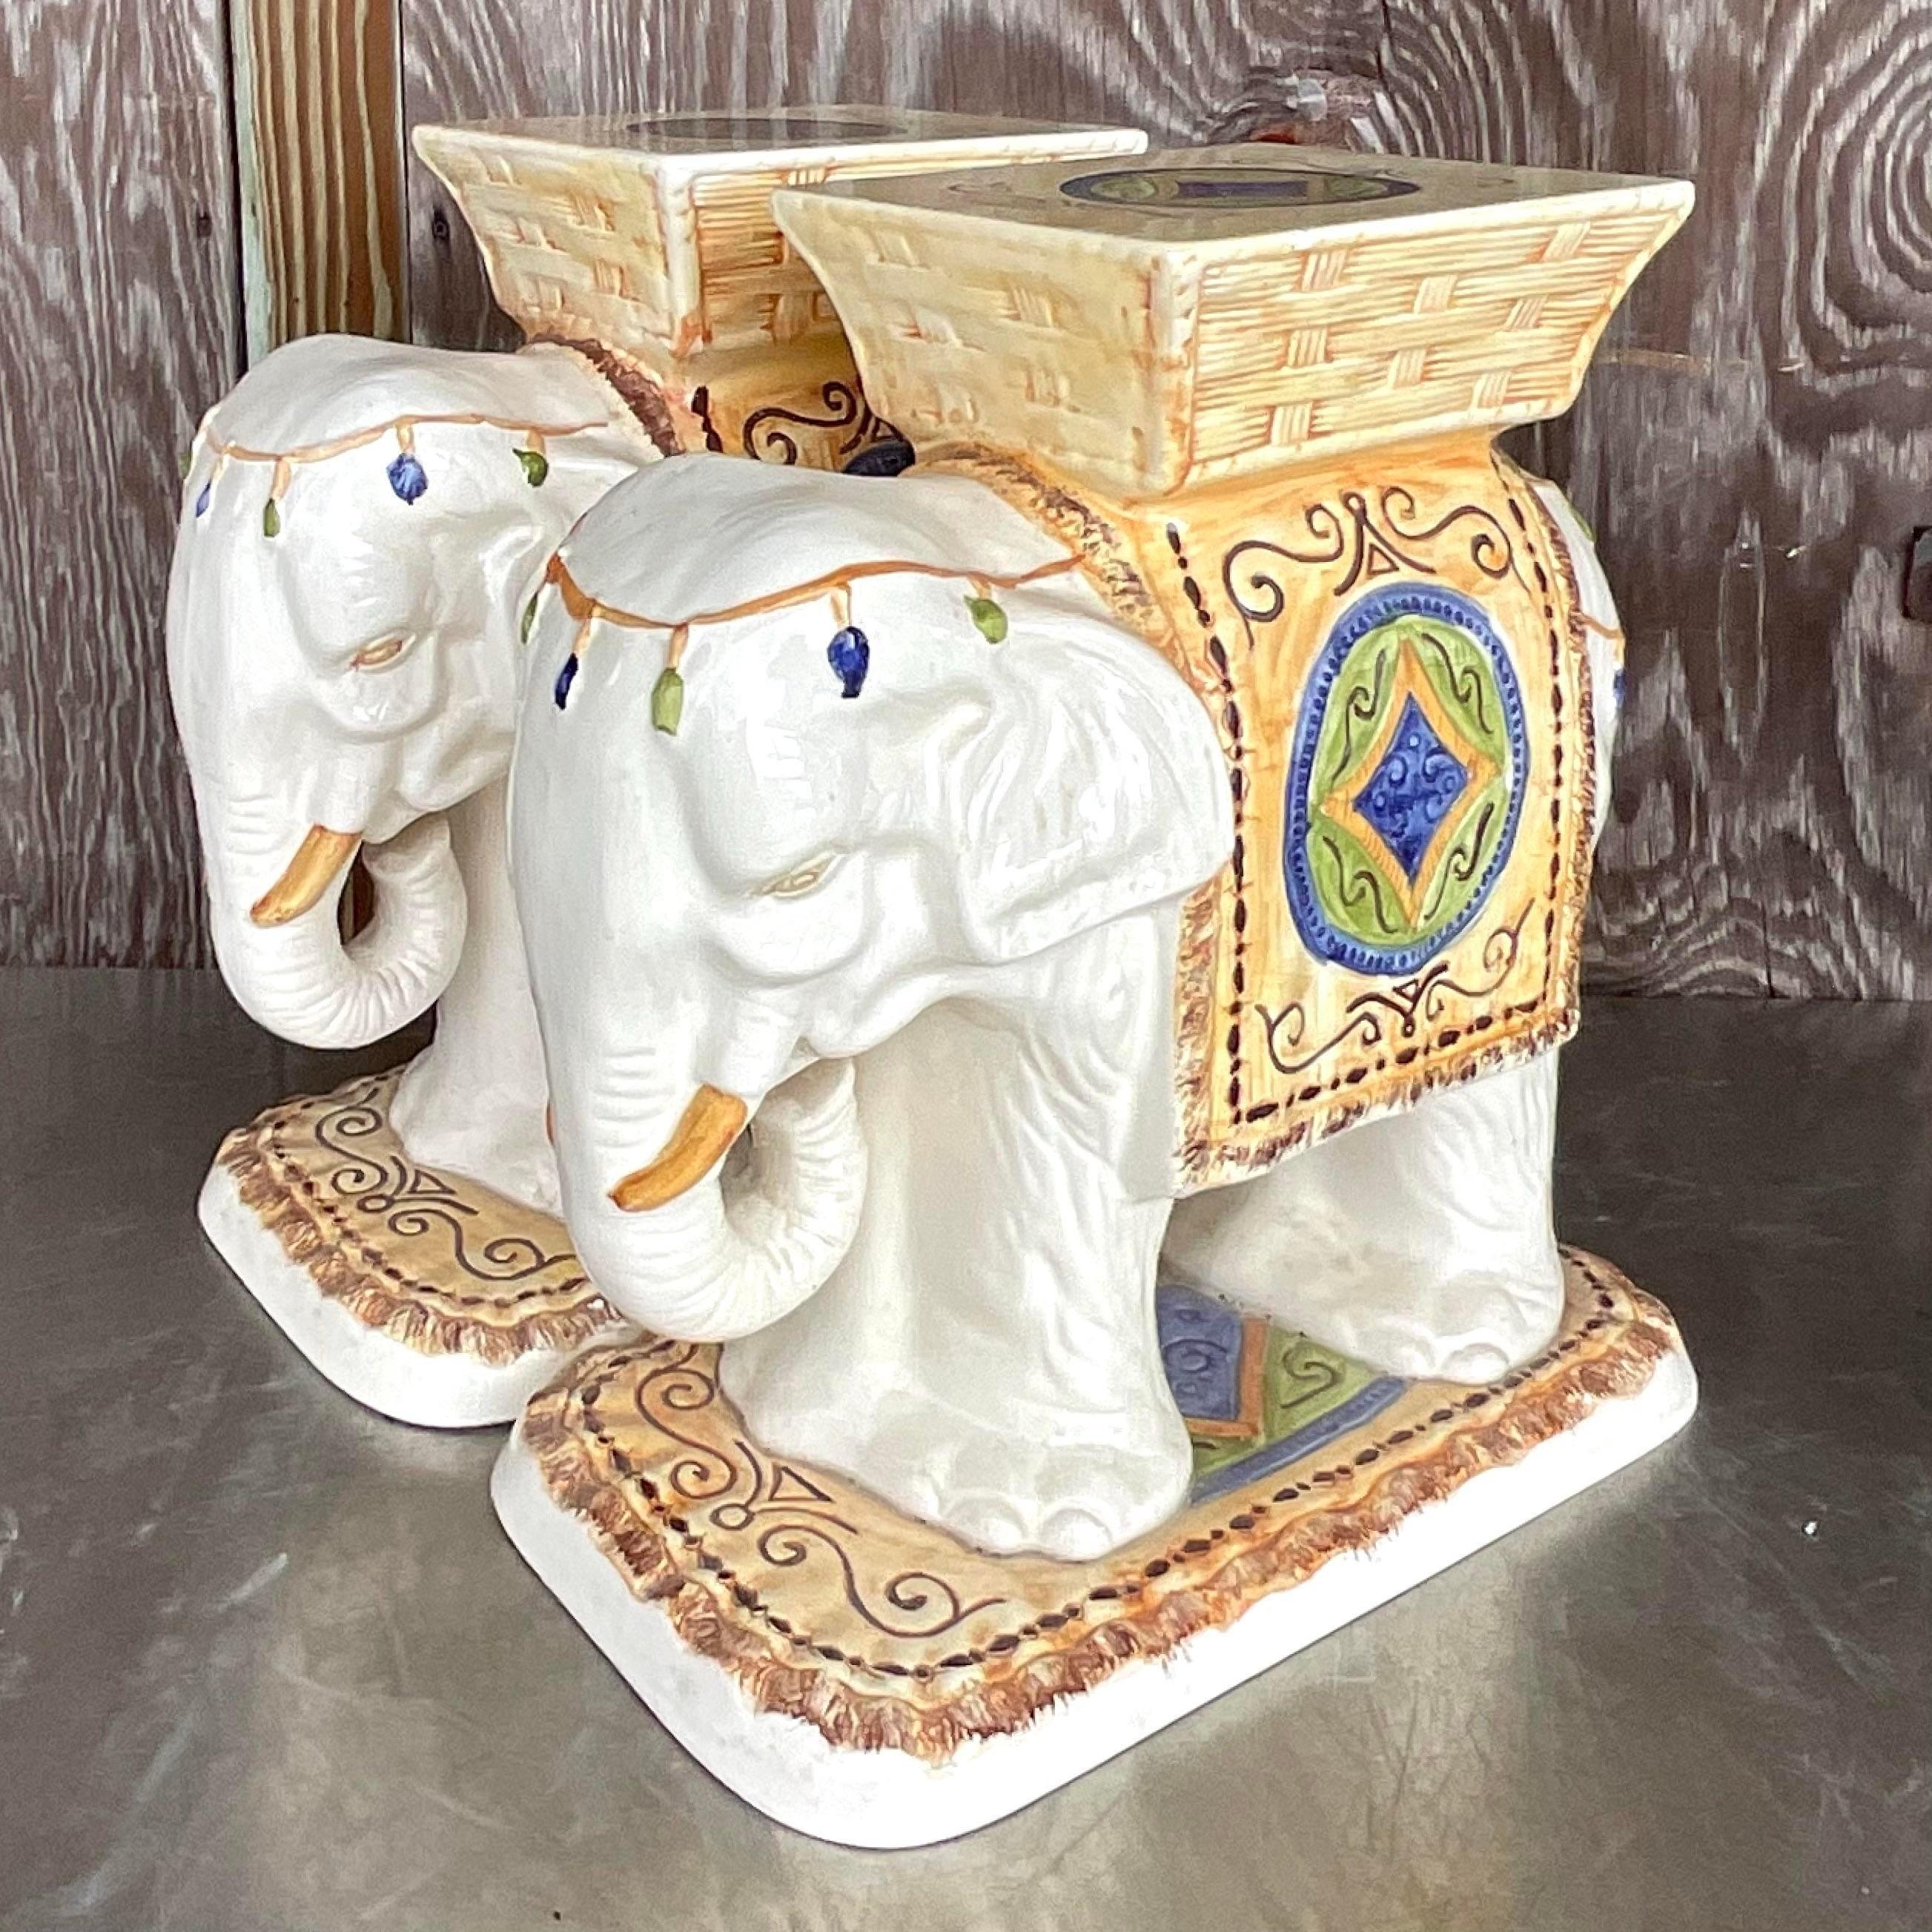 Chinese Vintage Boho Glazed Ceramic Elephant Stools - a Pair For Sale